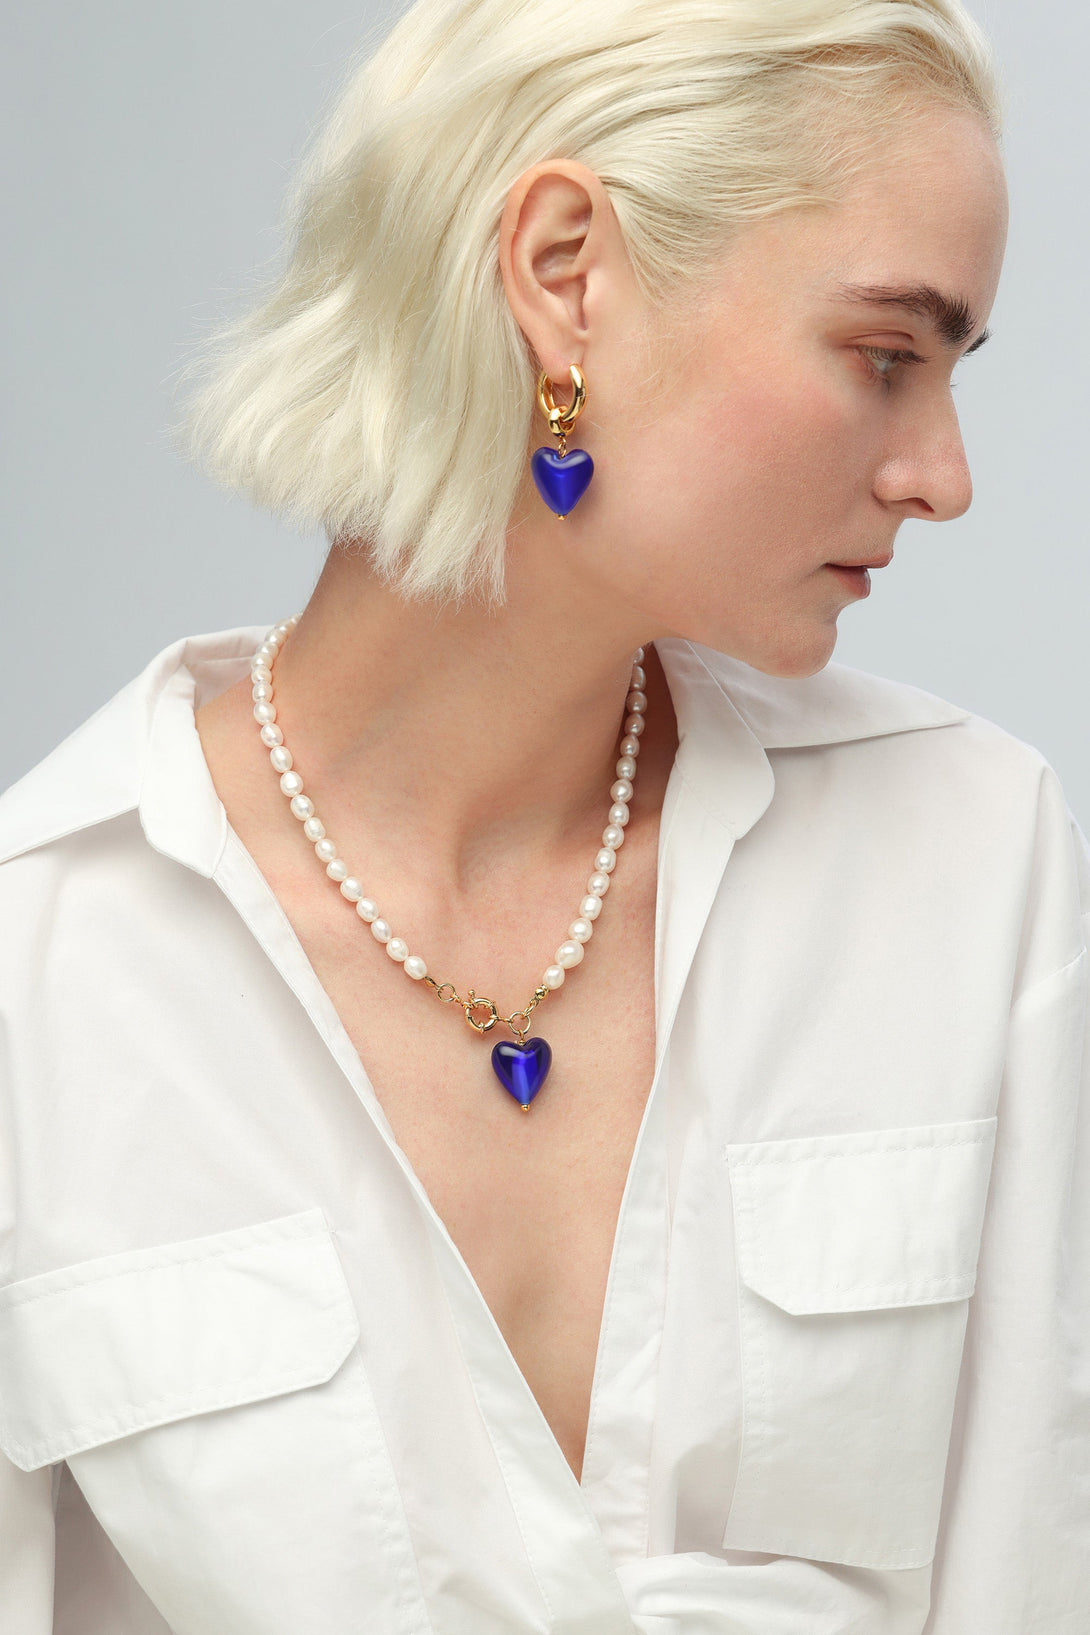 Esmée Blue Glaze Heart Pendant Pearl Necklace and Earrings Set - Classicharms